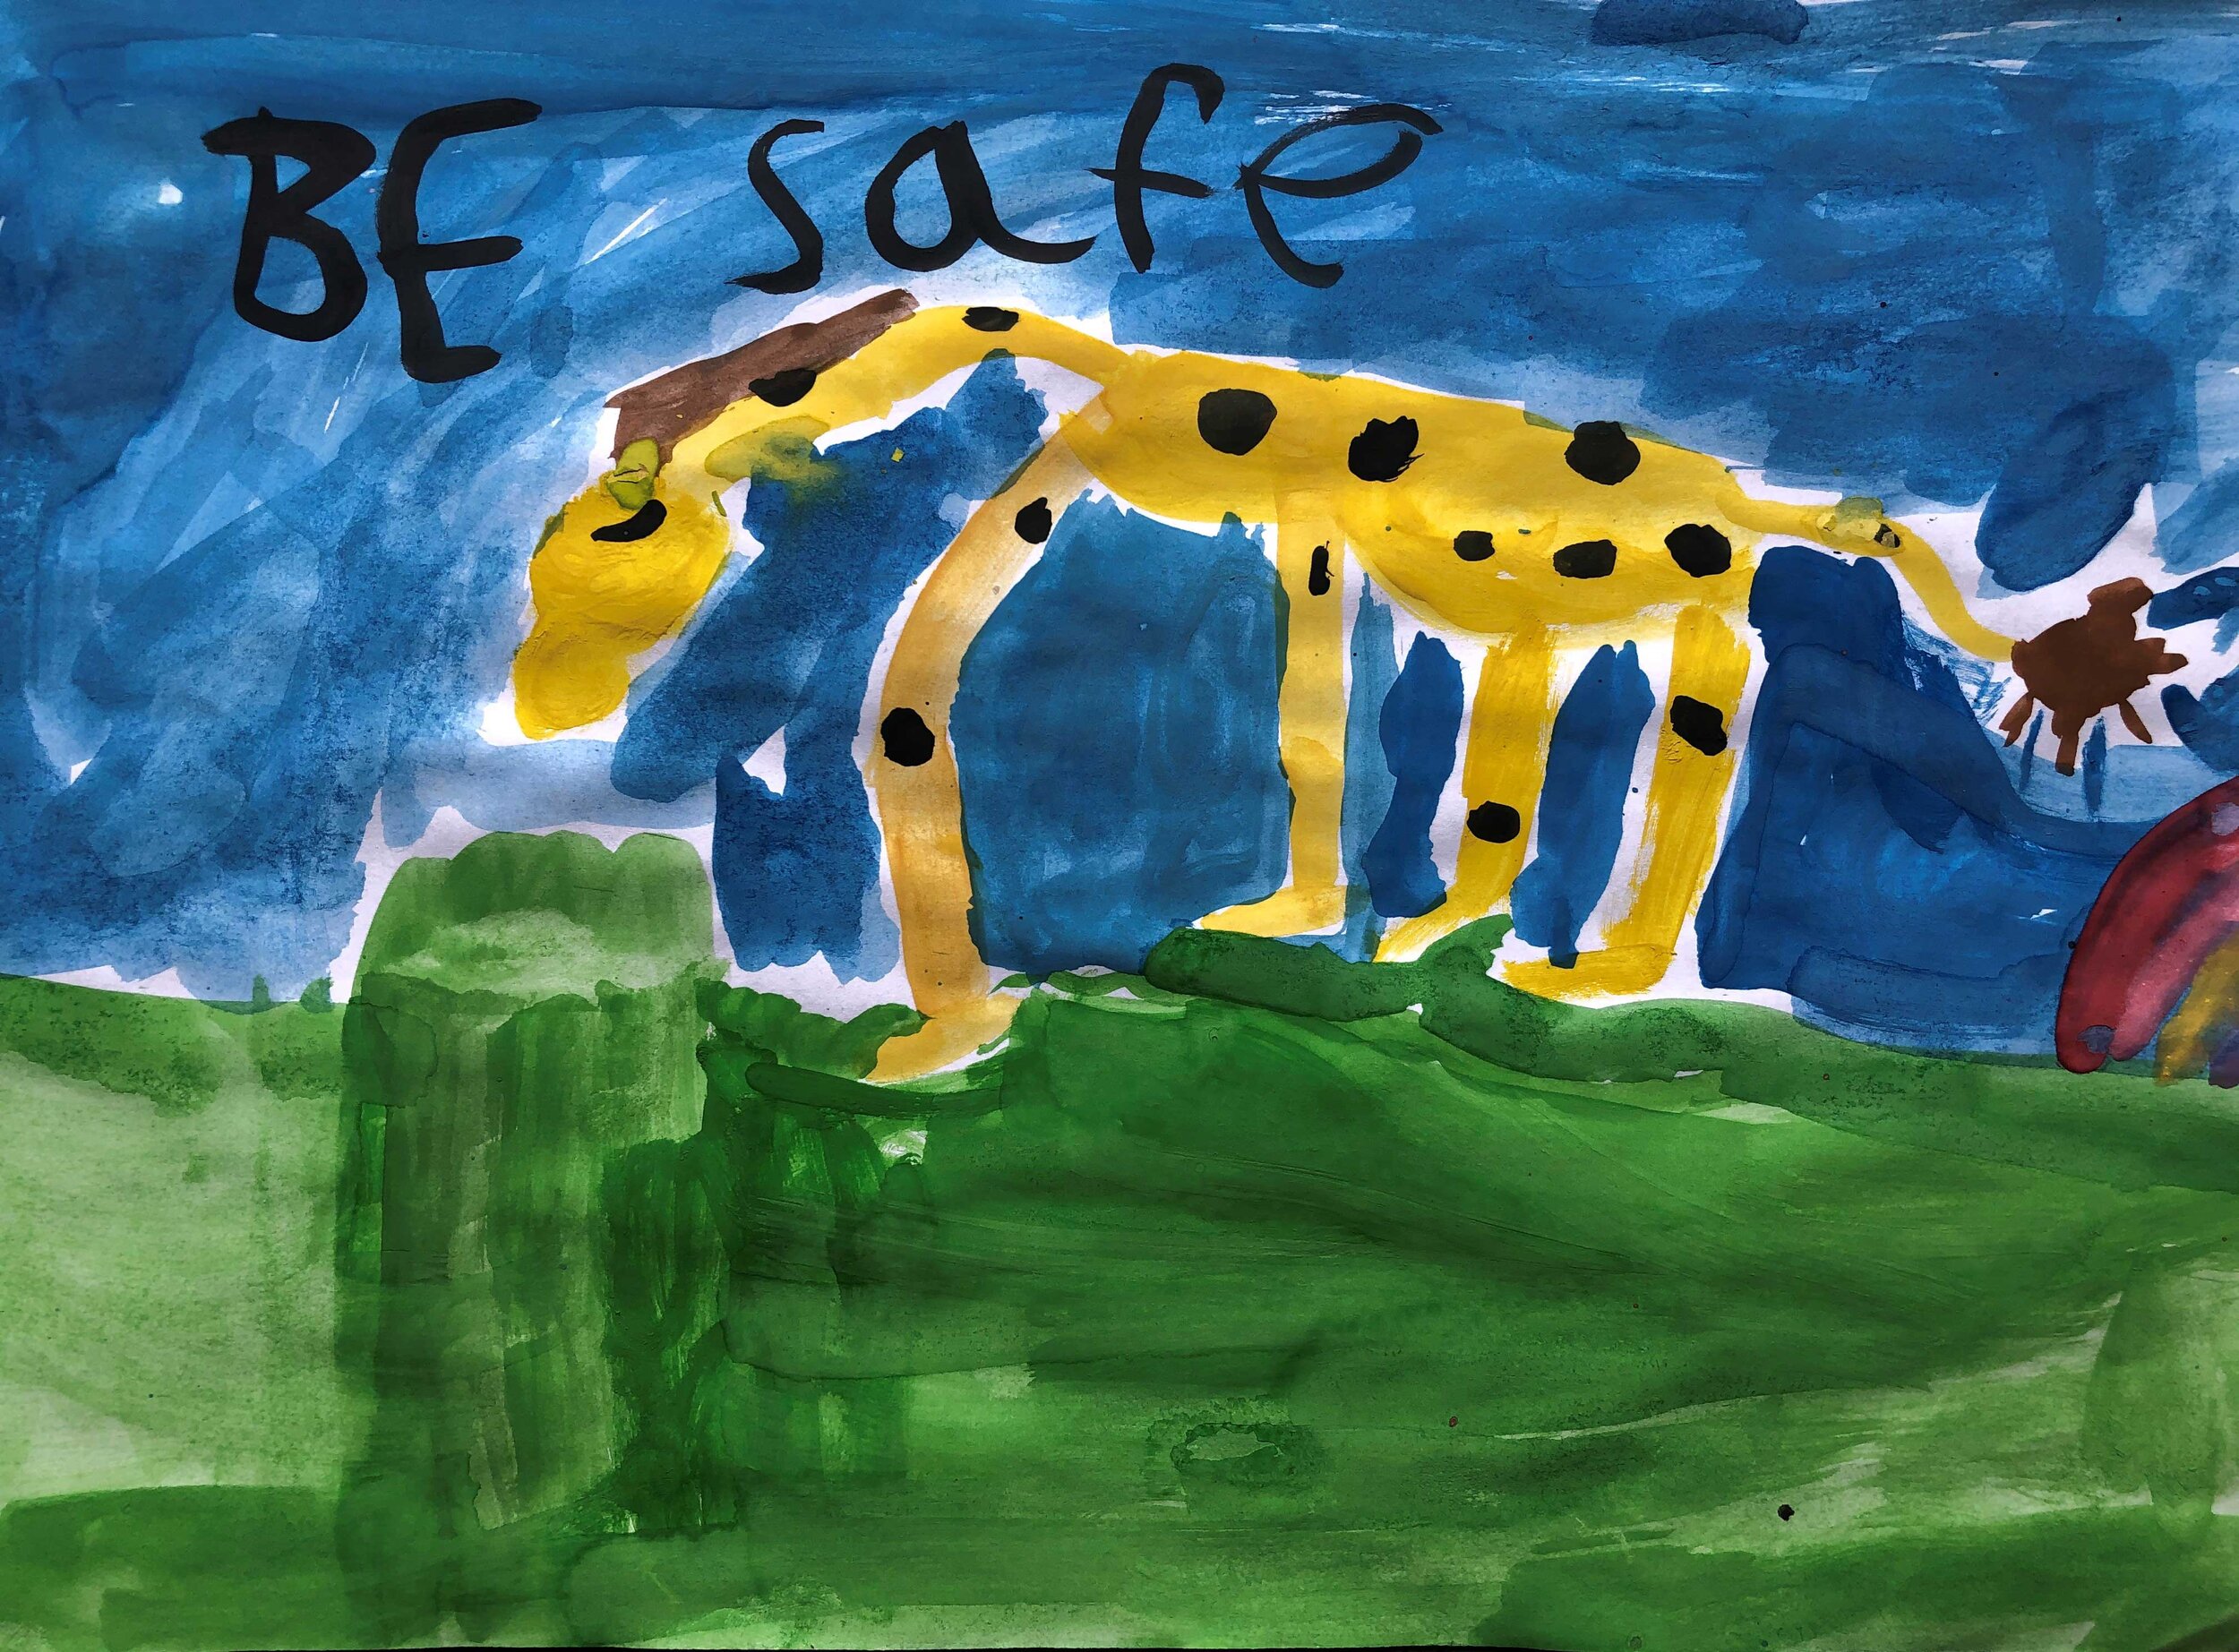 Be safe by Regina Kalman age 7